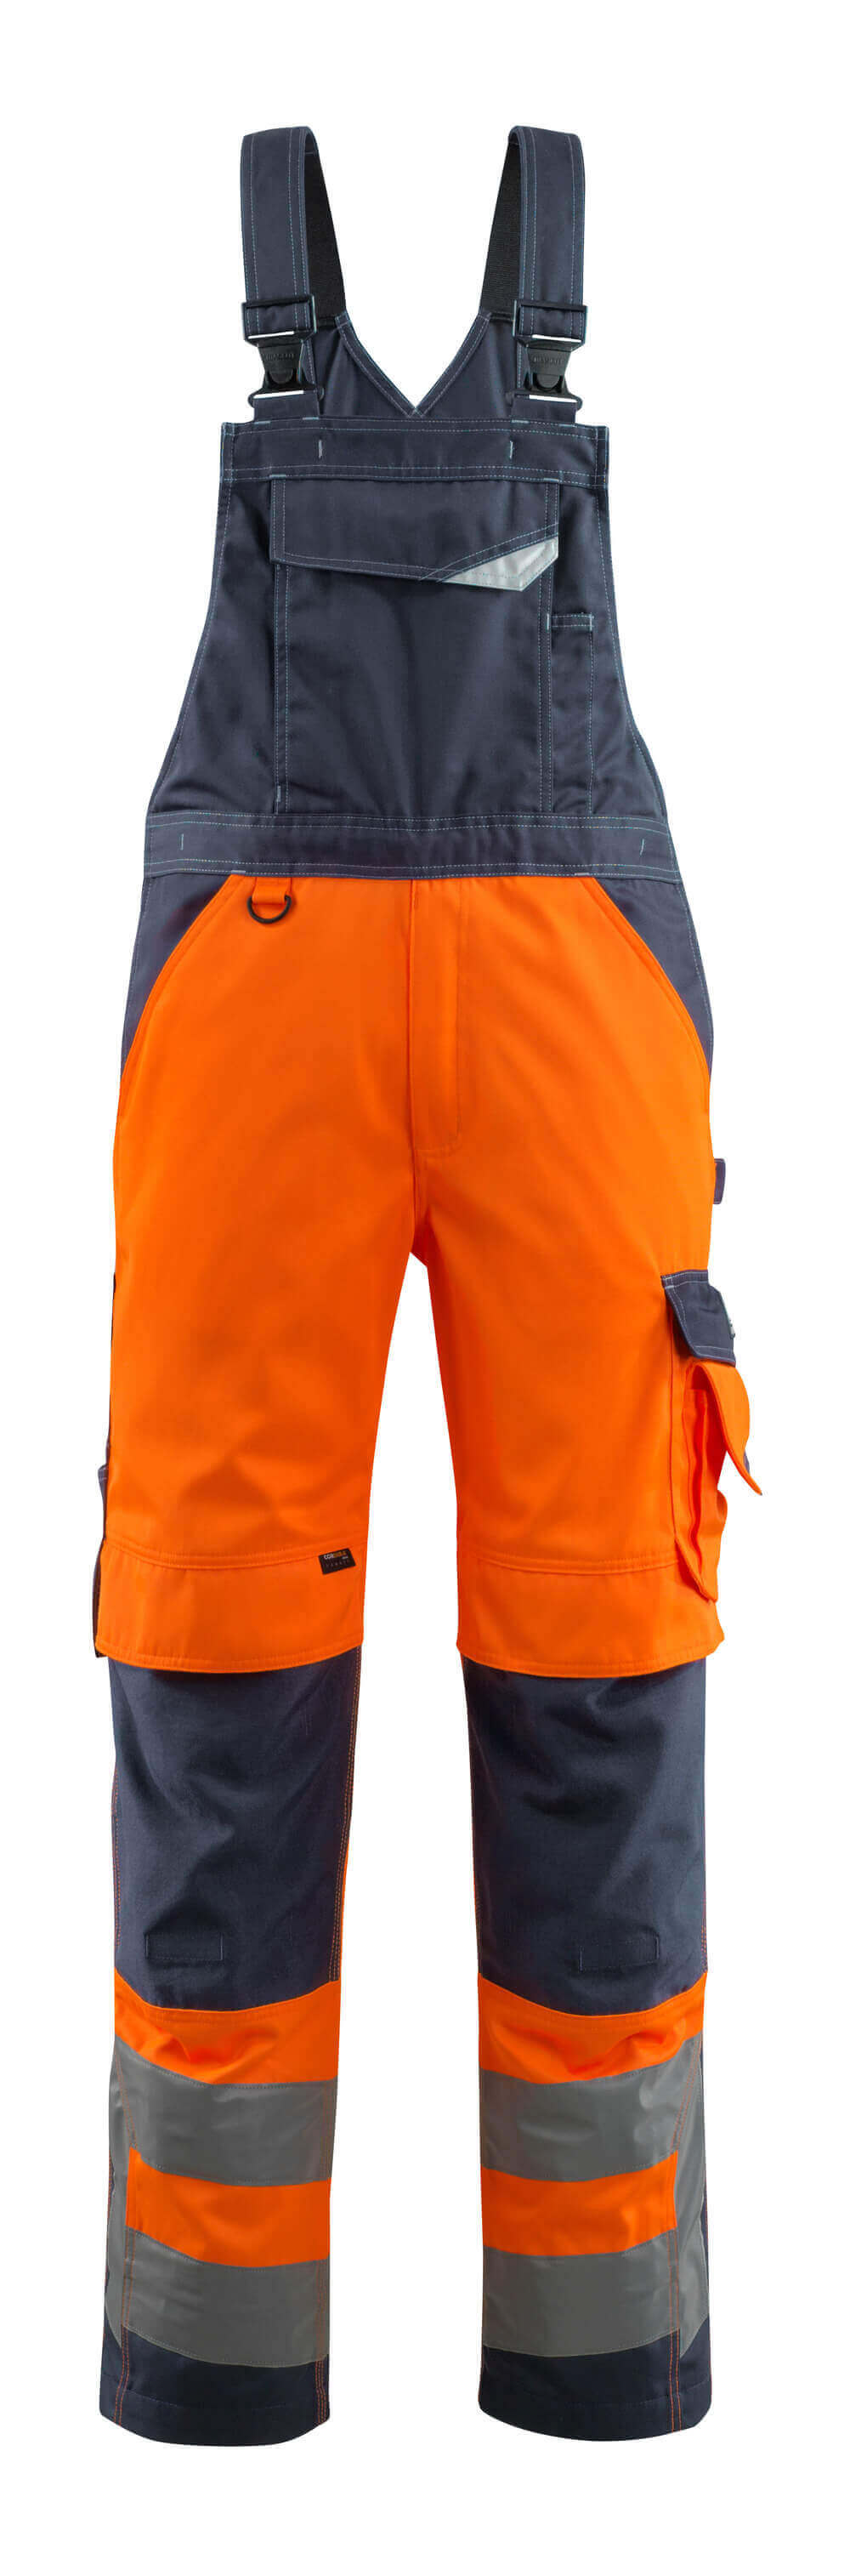 Mascot SAFE SUPREME  Newcastle Bib & Brace with kneepad pockets 15569 hi-vis orange/dark navy